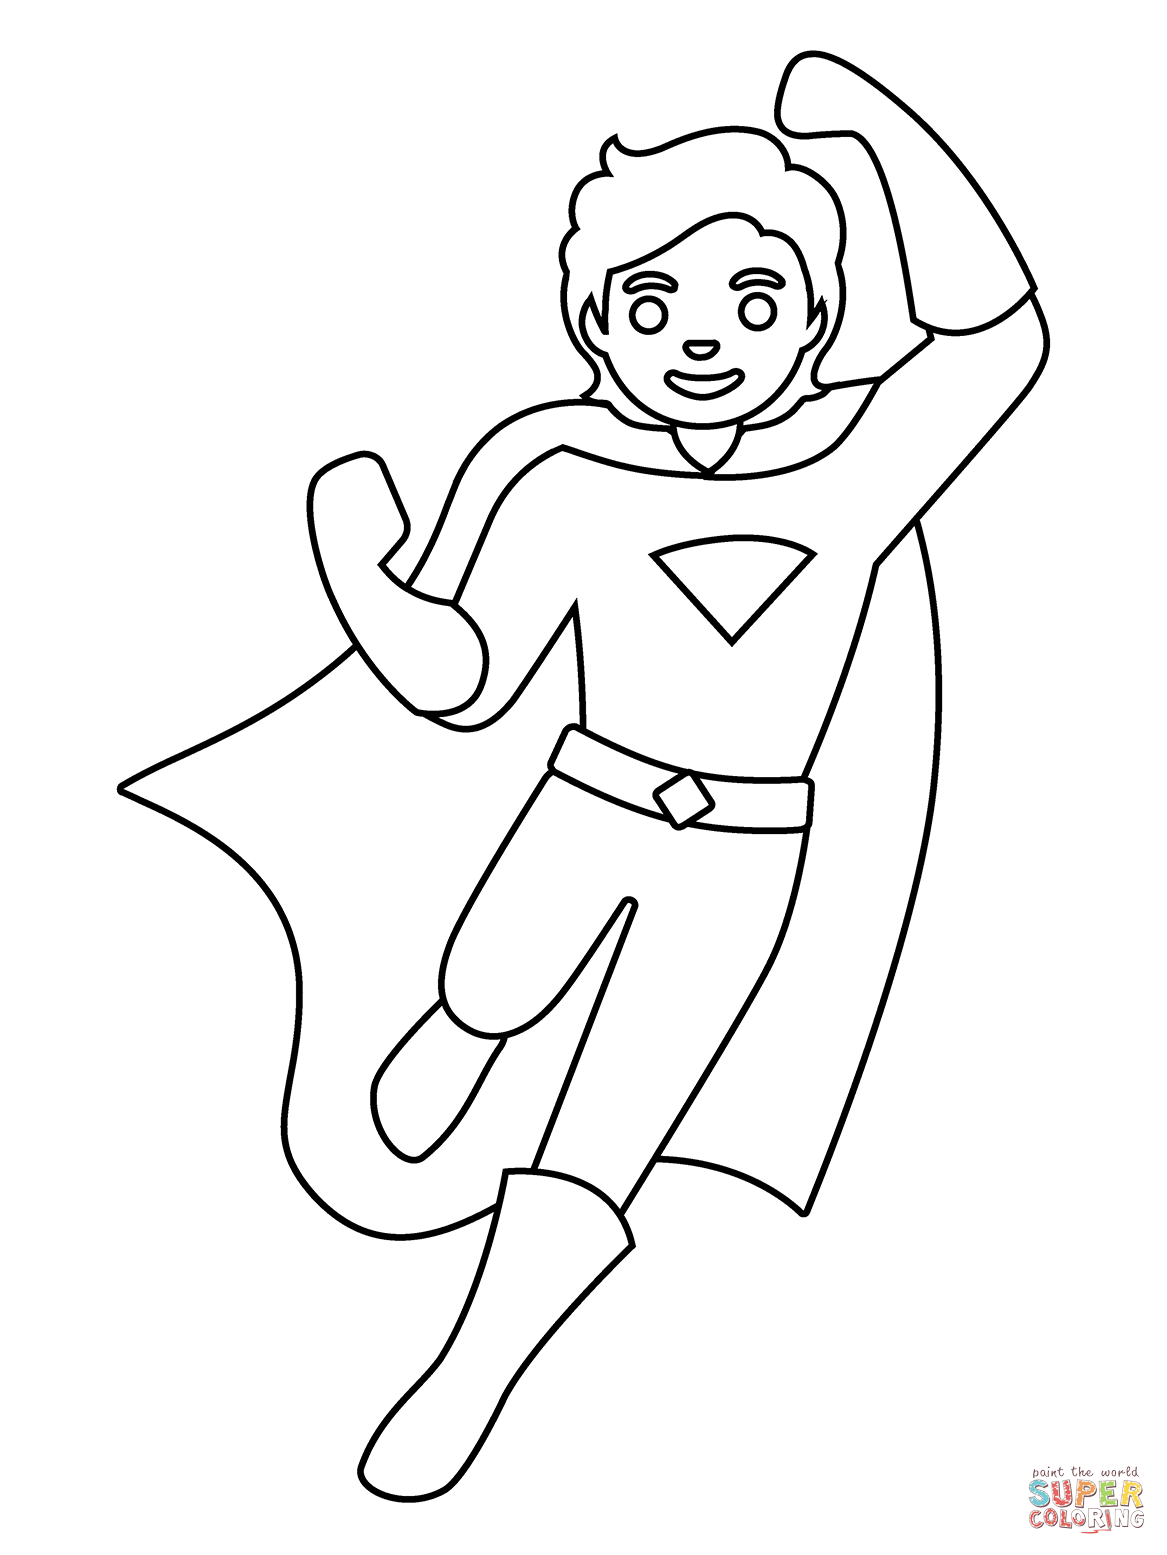 Superhero emoji coloring page free printable coloring pages